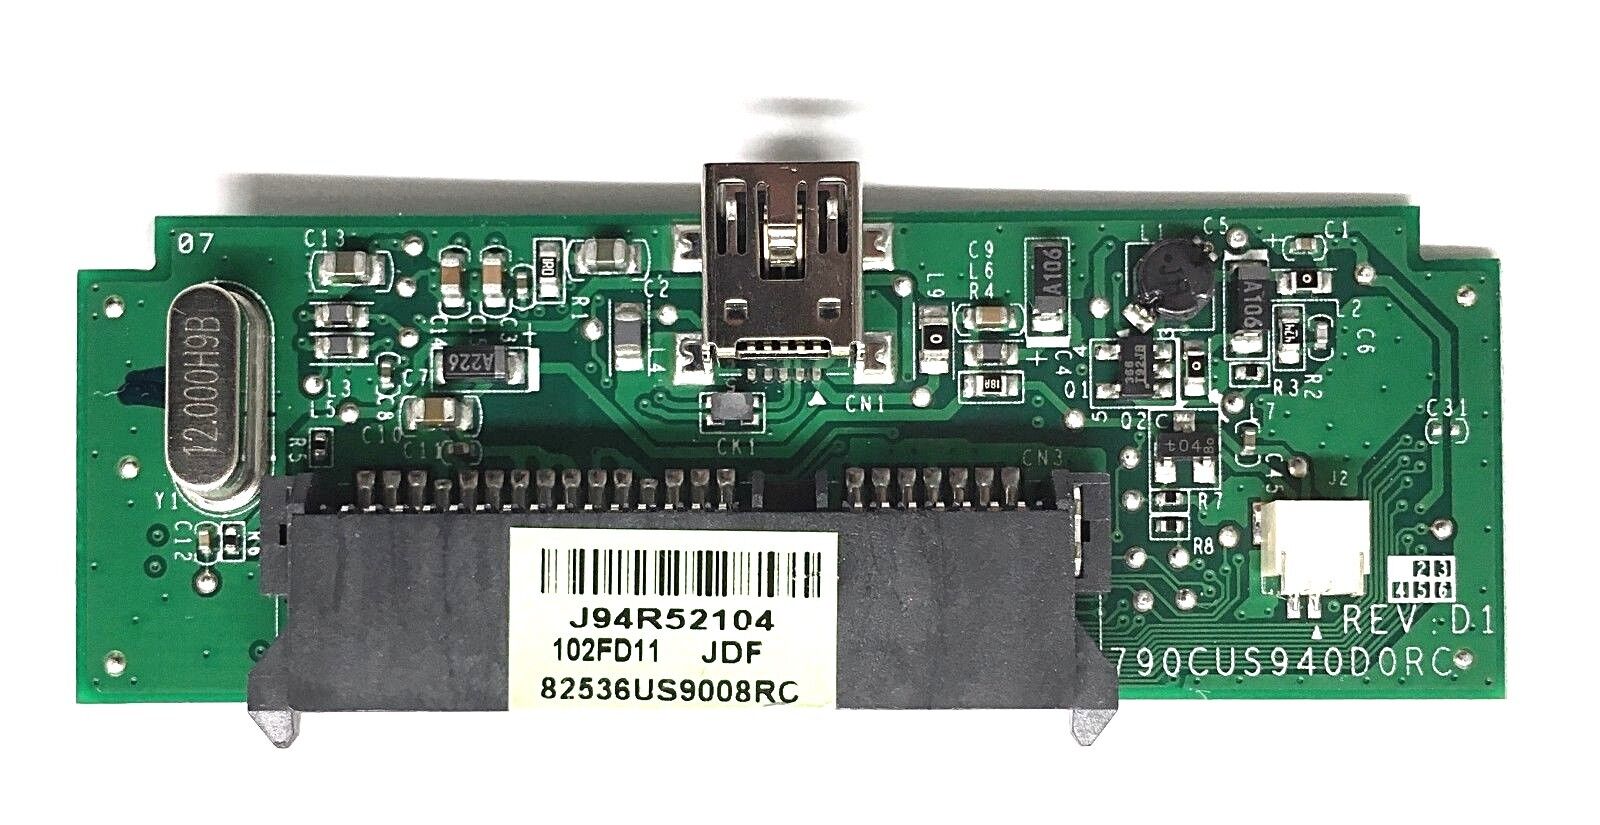 94V-0 Seagate PCB Replacement Controller 790CUS940D0RC REV D1 USB 2.0 / E55-11